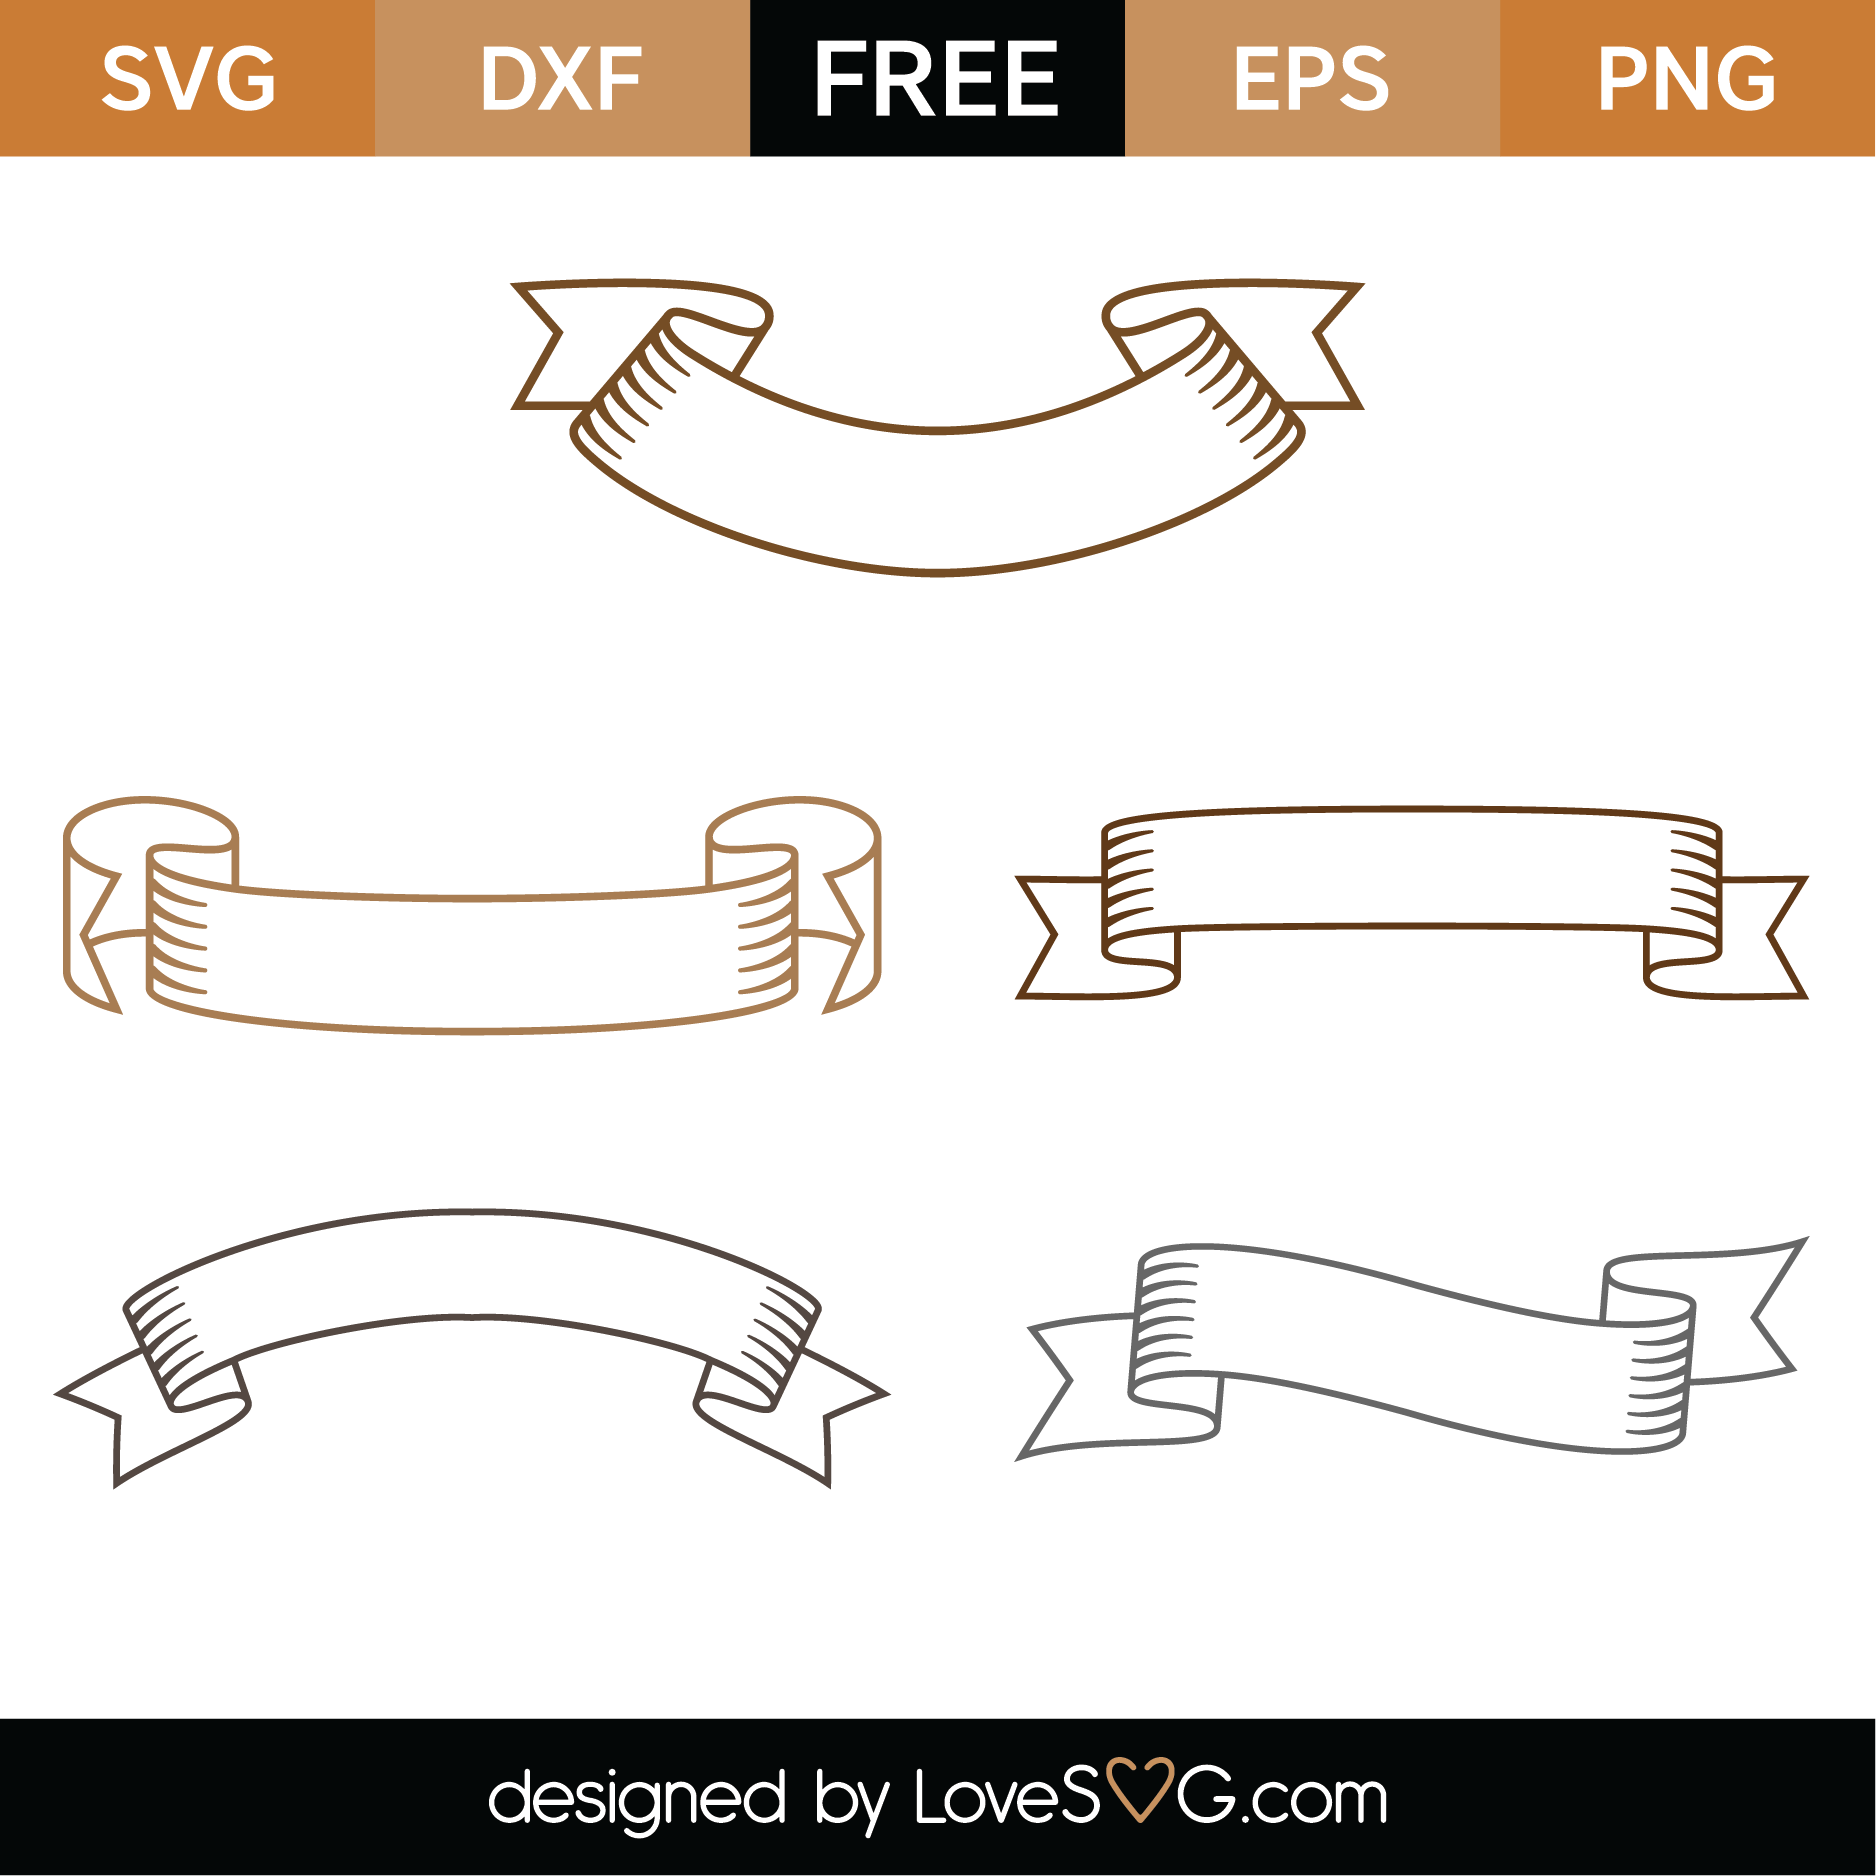 Download Free Banners SVG Cut Files | Lovesvg.com